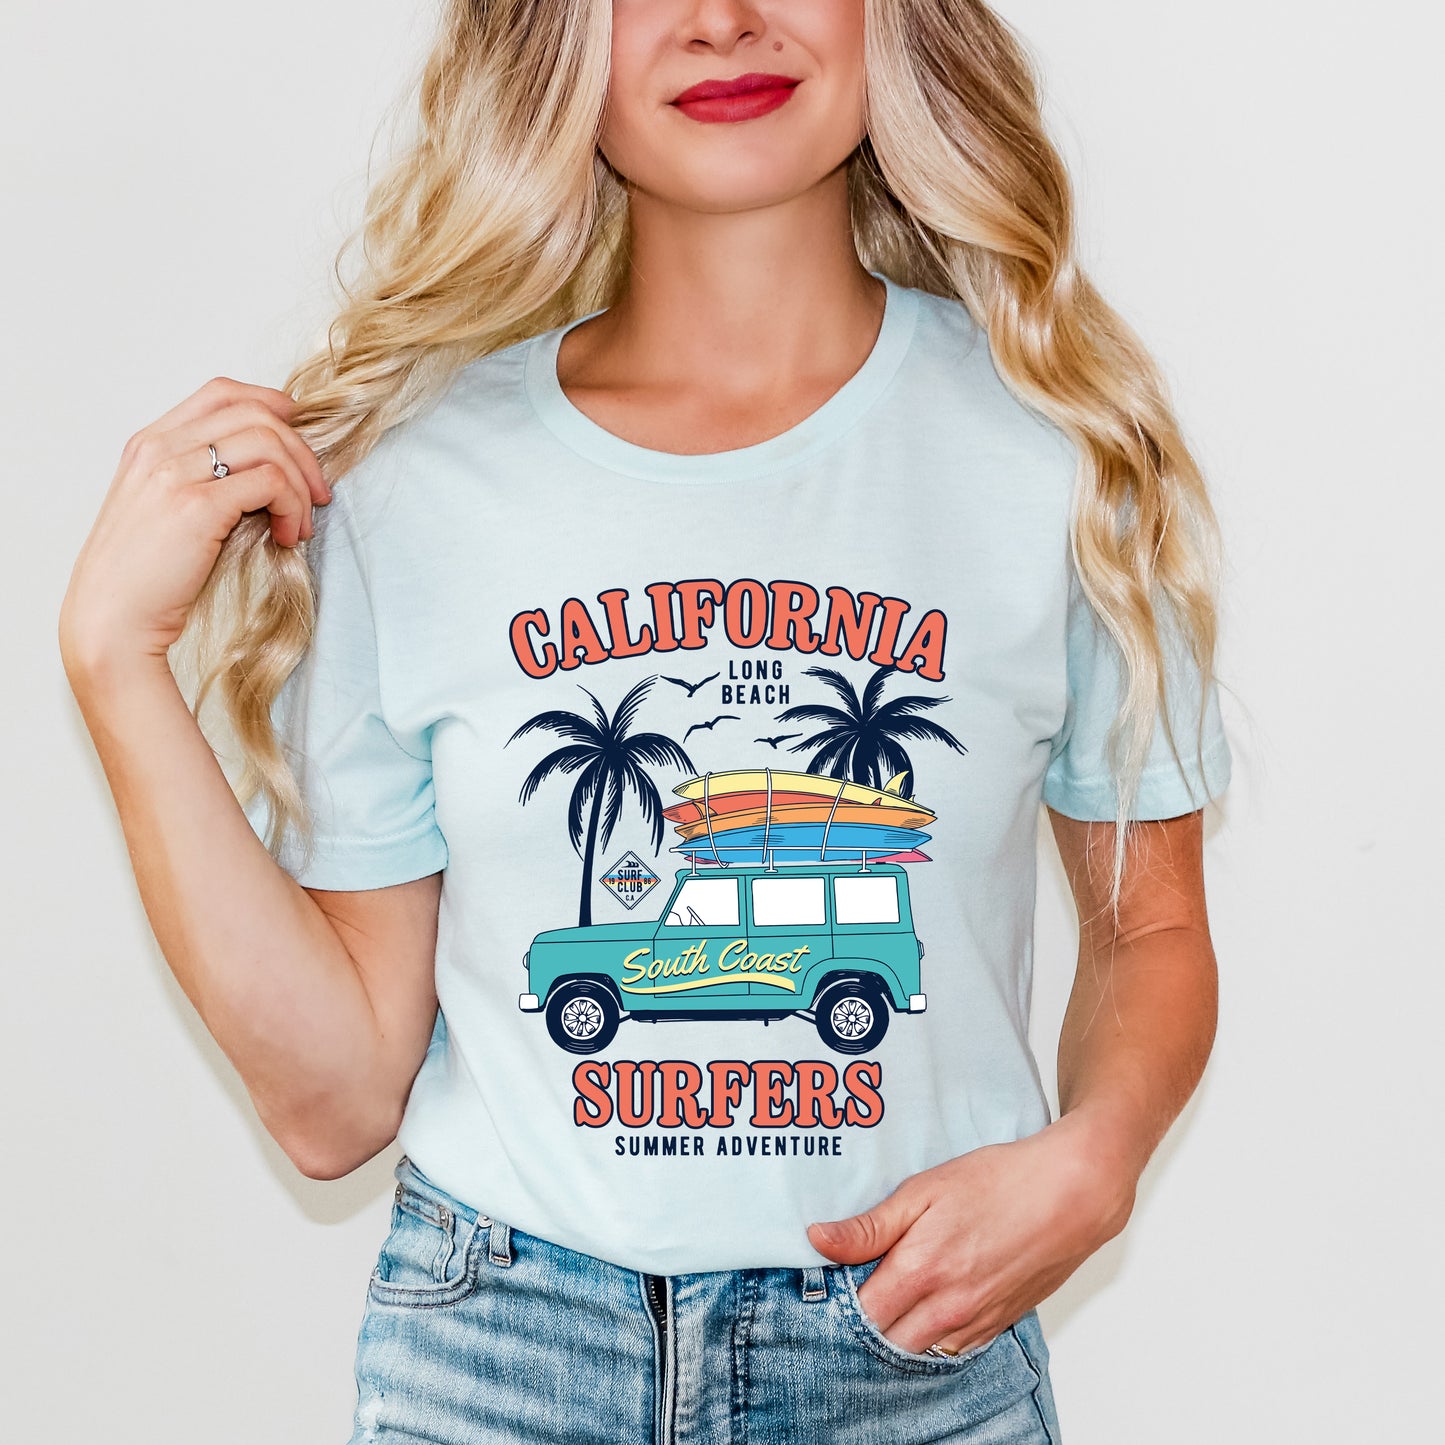 California Surfers | Short Sleeve Graphic Tee